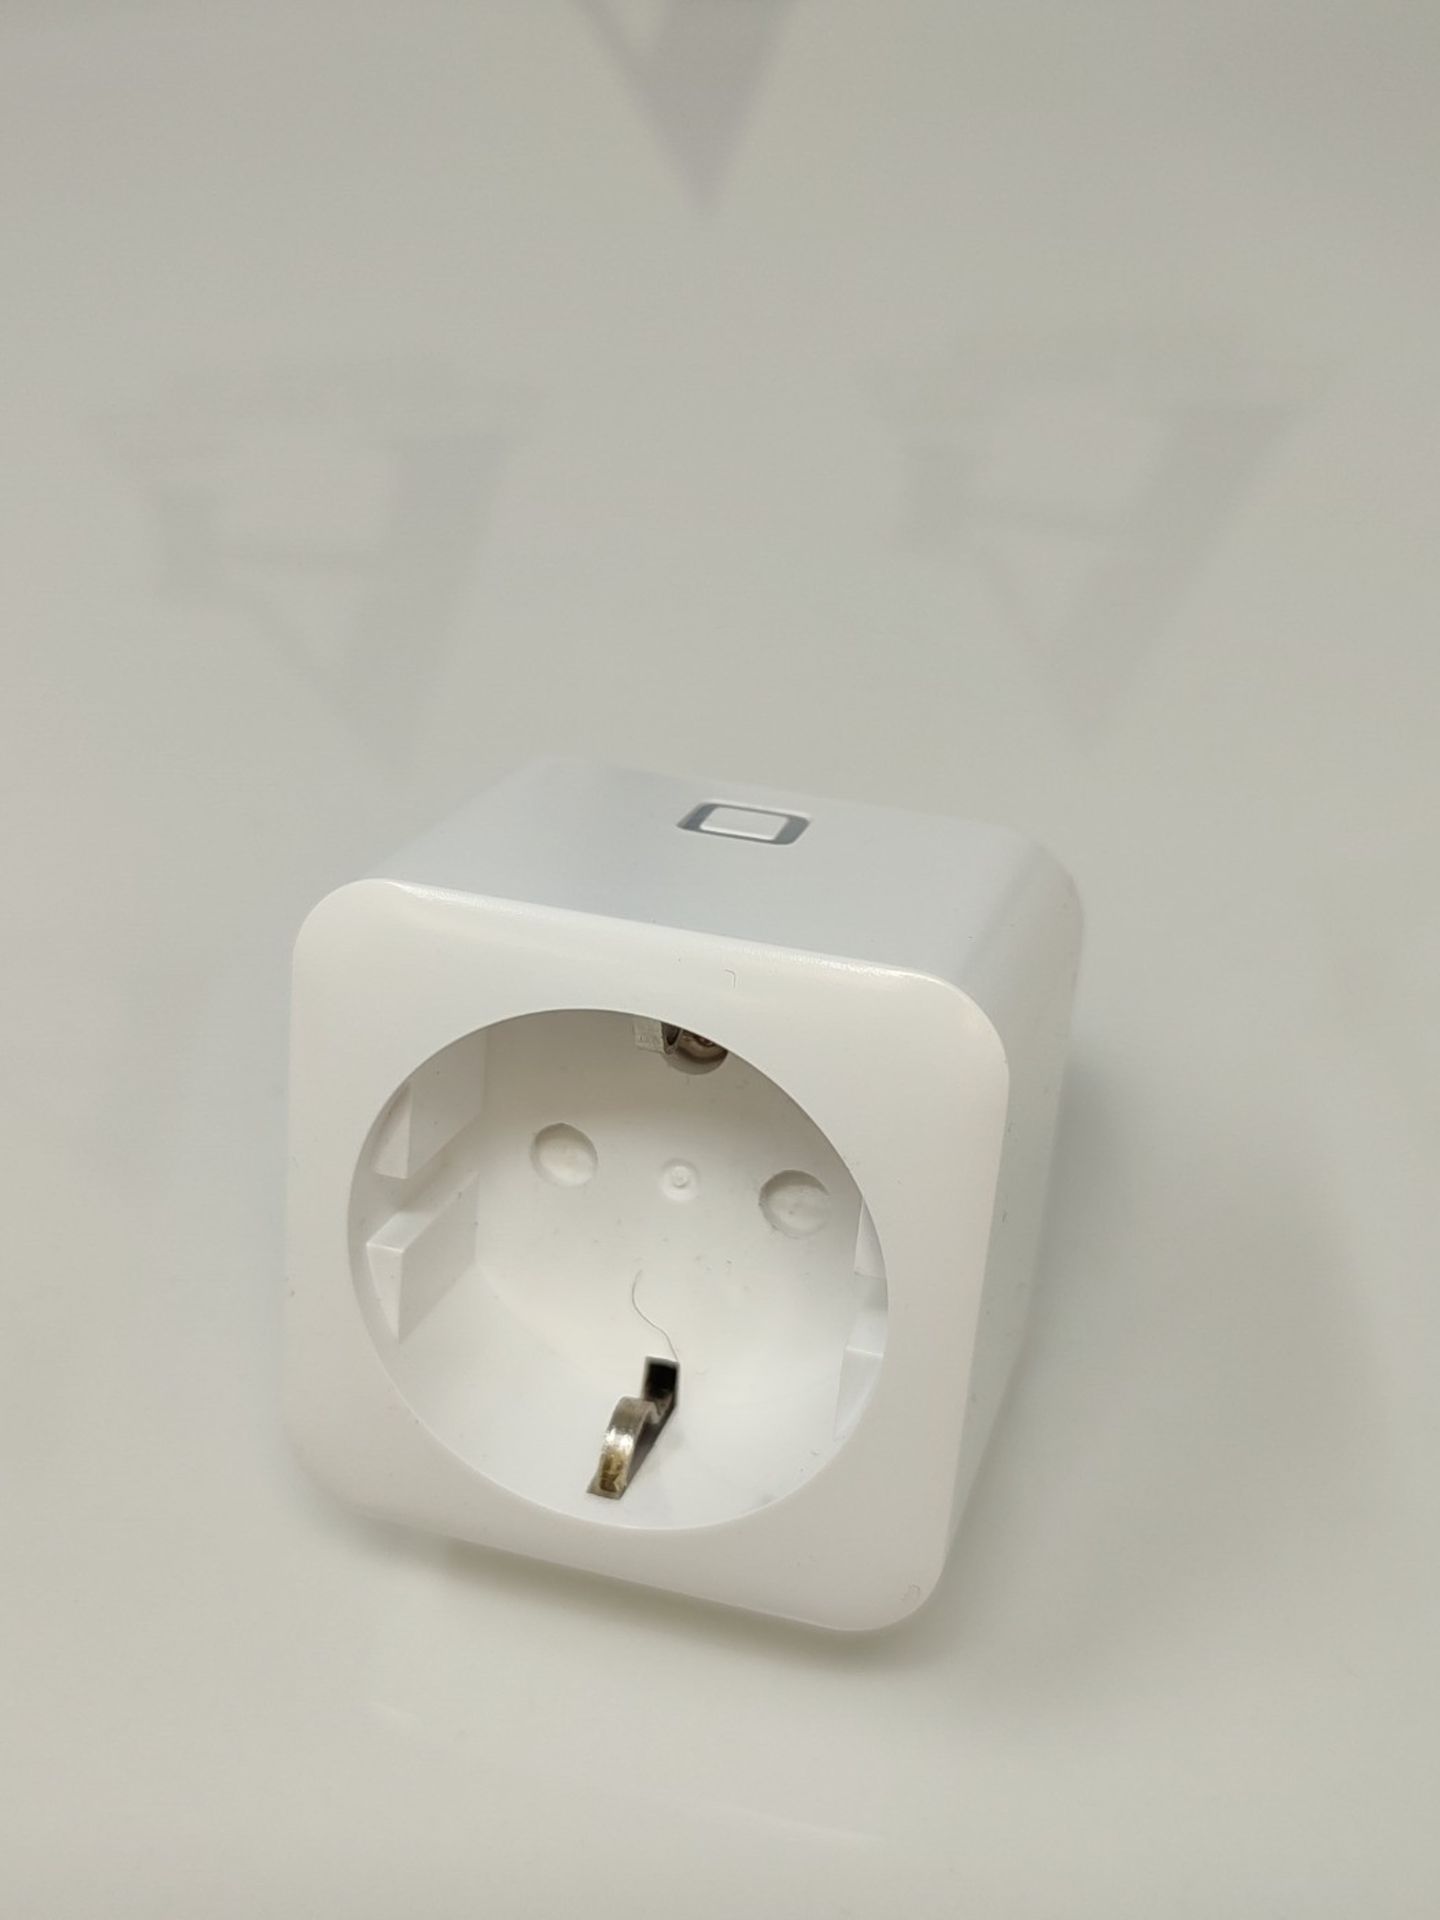 AduroSmart Smart plug dimmable and compatible with AduroSmart, Hue, and Alexa, white, - Image 3 of 3